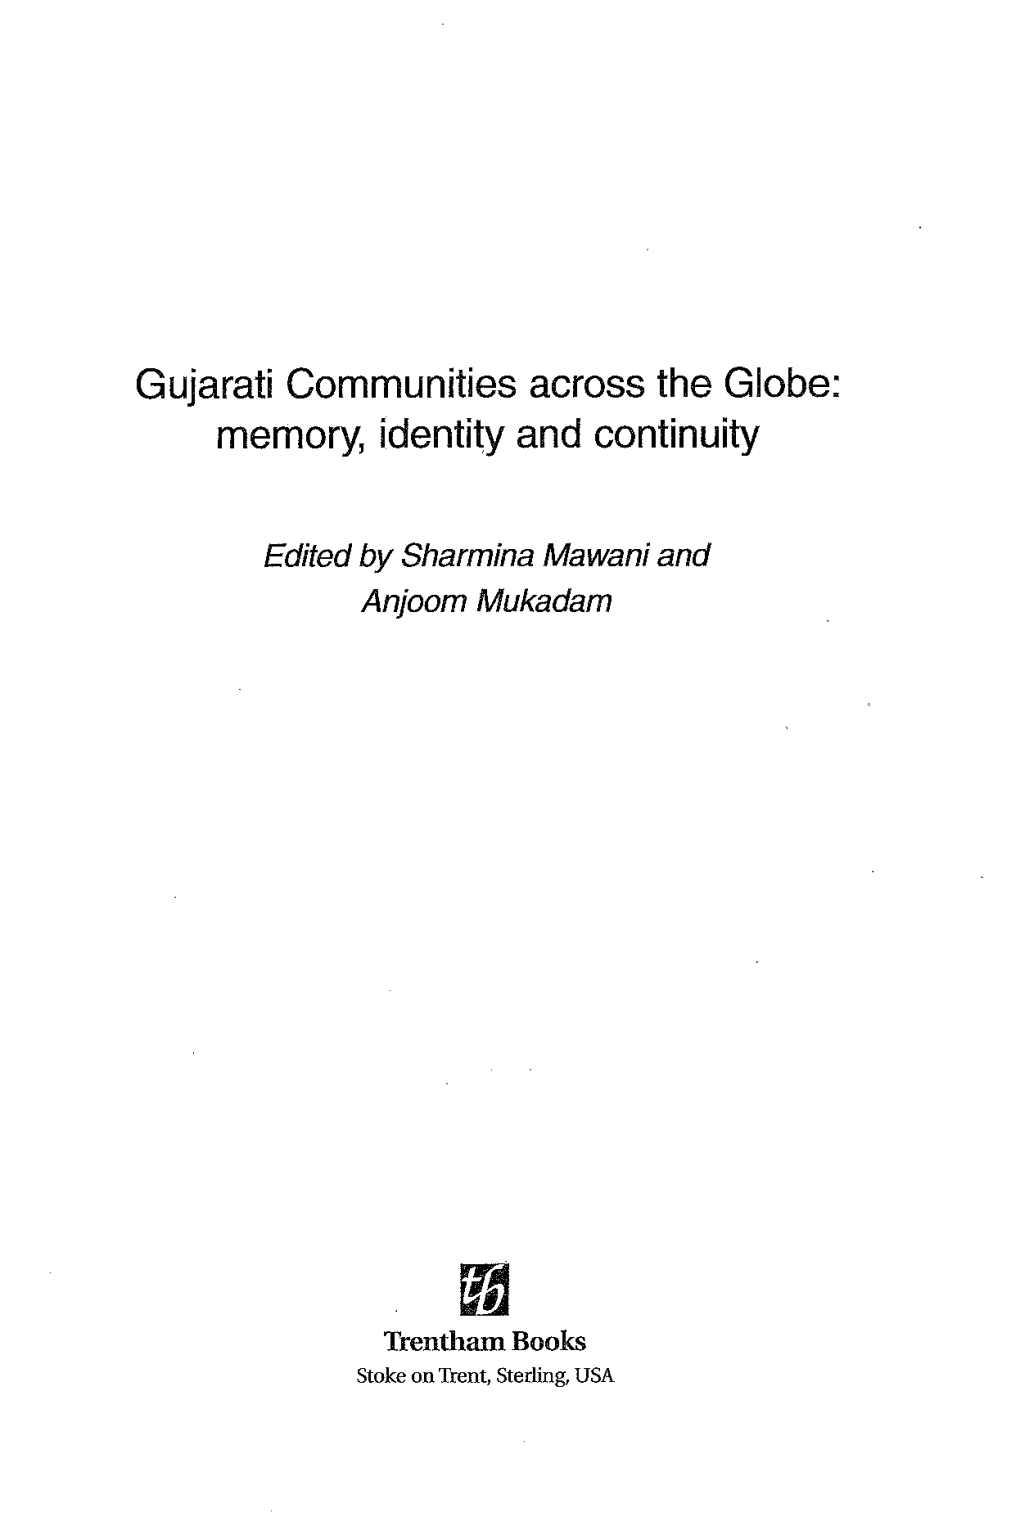 Gujarati Communities Across the Globe: Memory, Identity and Continuity